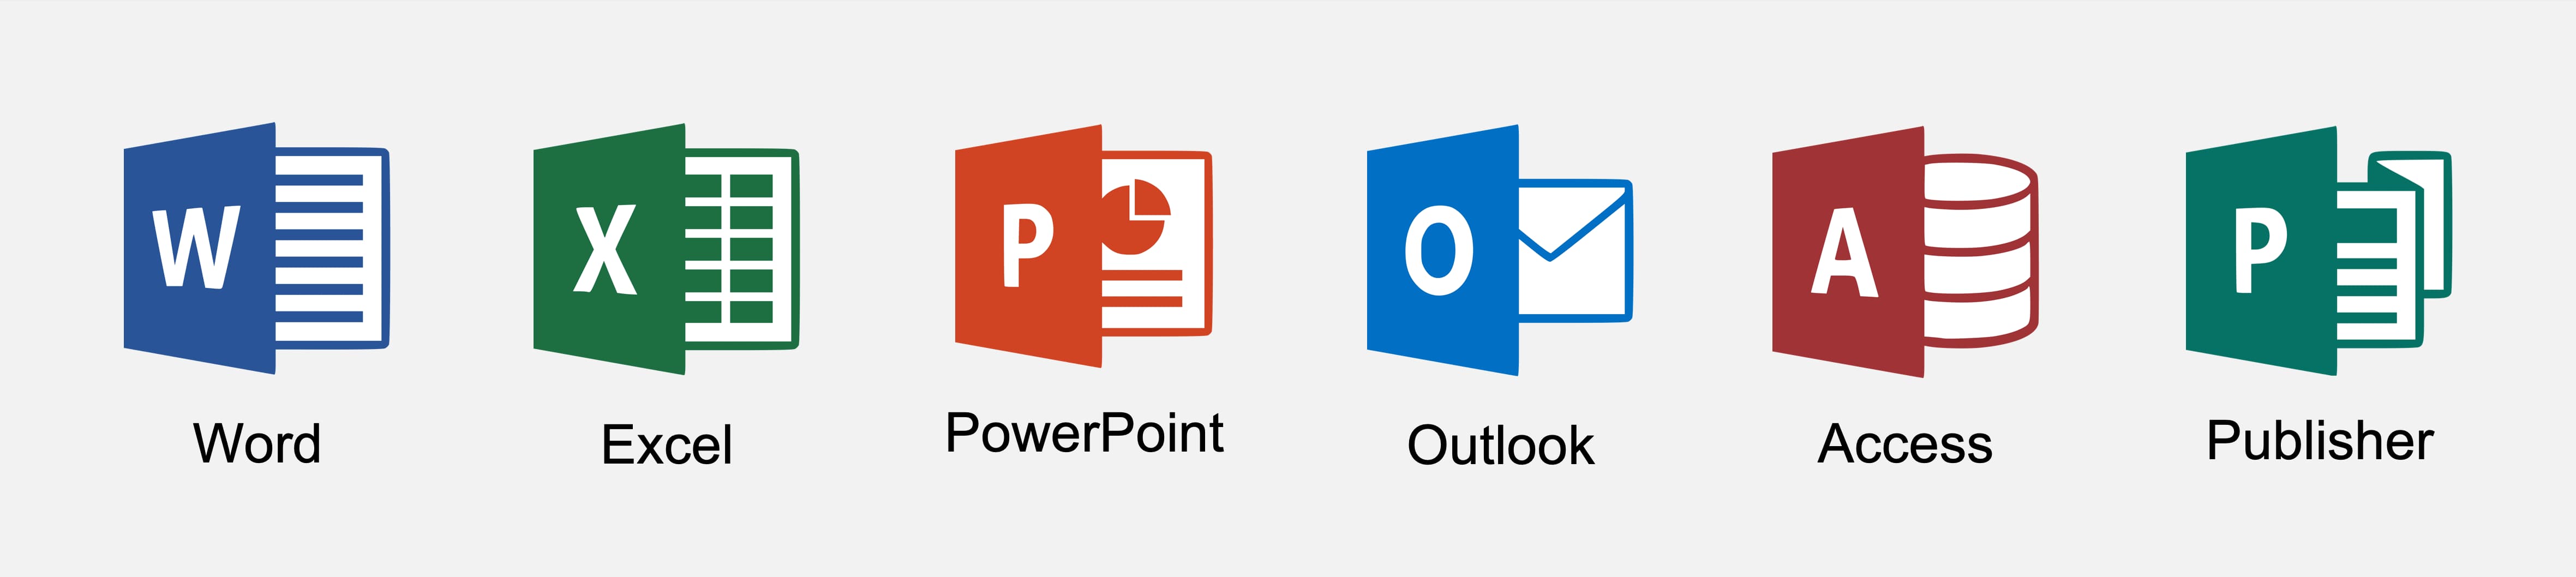 Office 365 个人/家庭版 5+ 折 特价，立即拥有正版 Word/Excel/PPT/Outlook 3